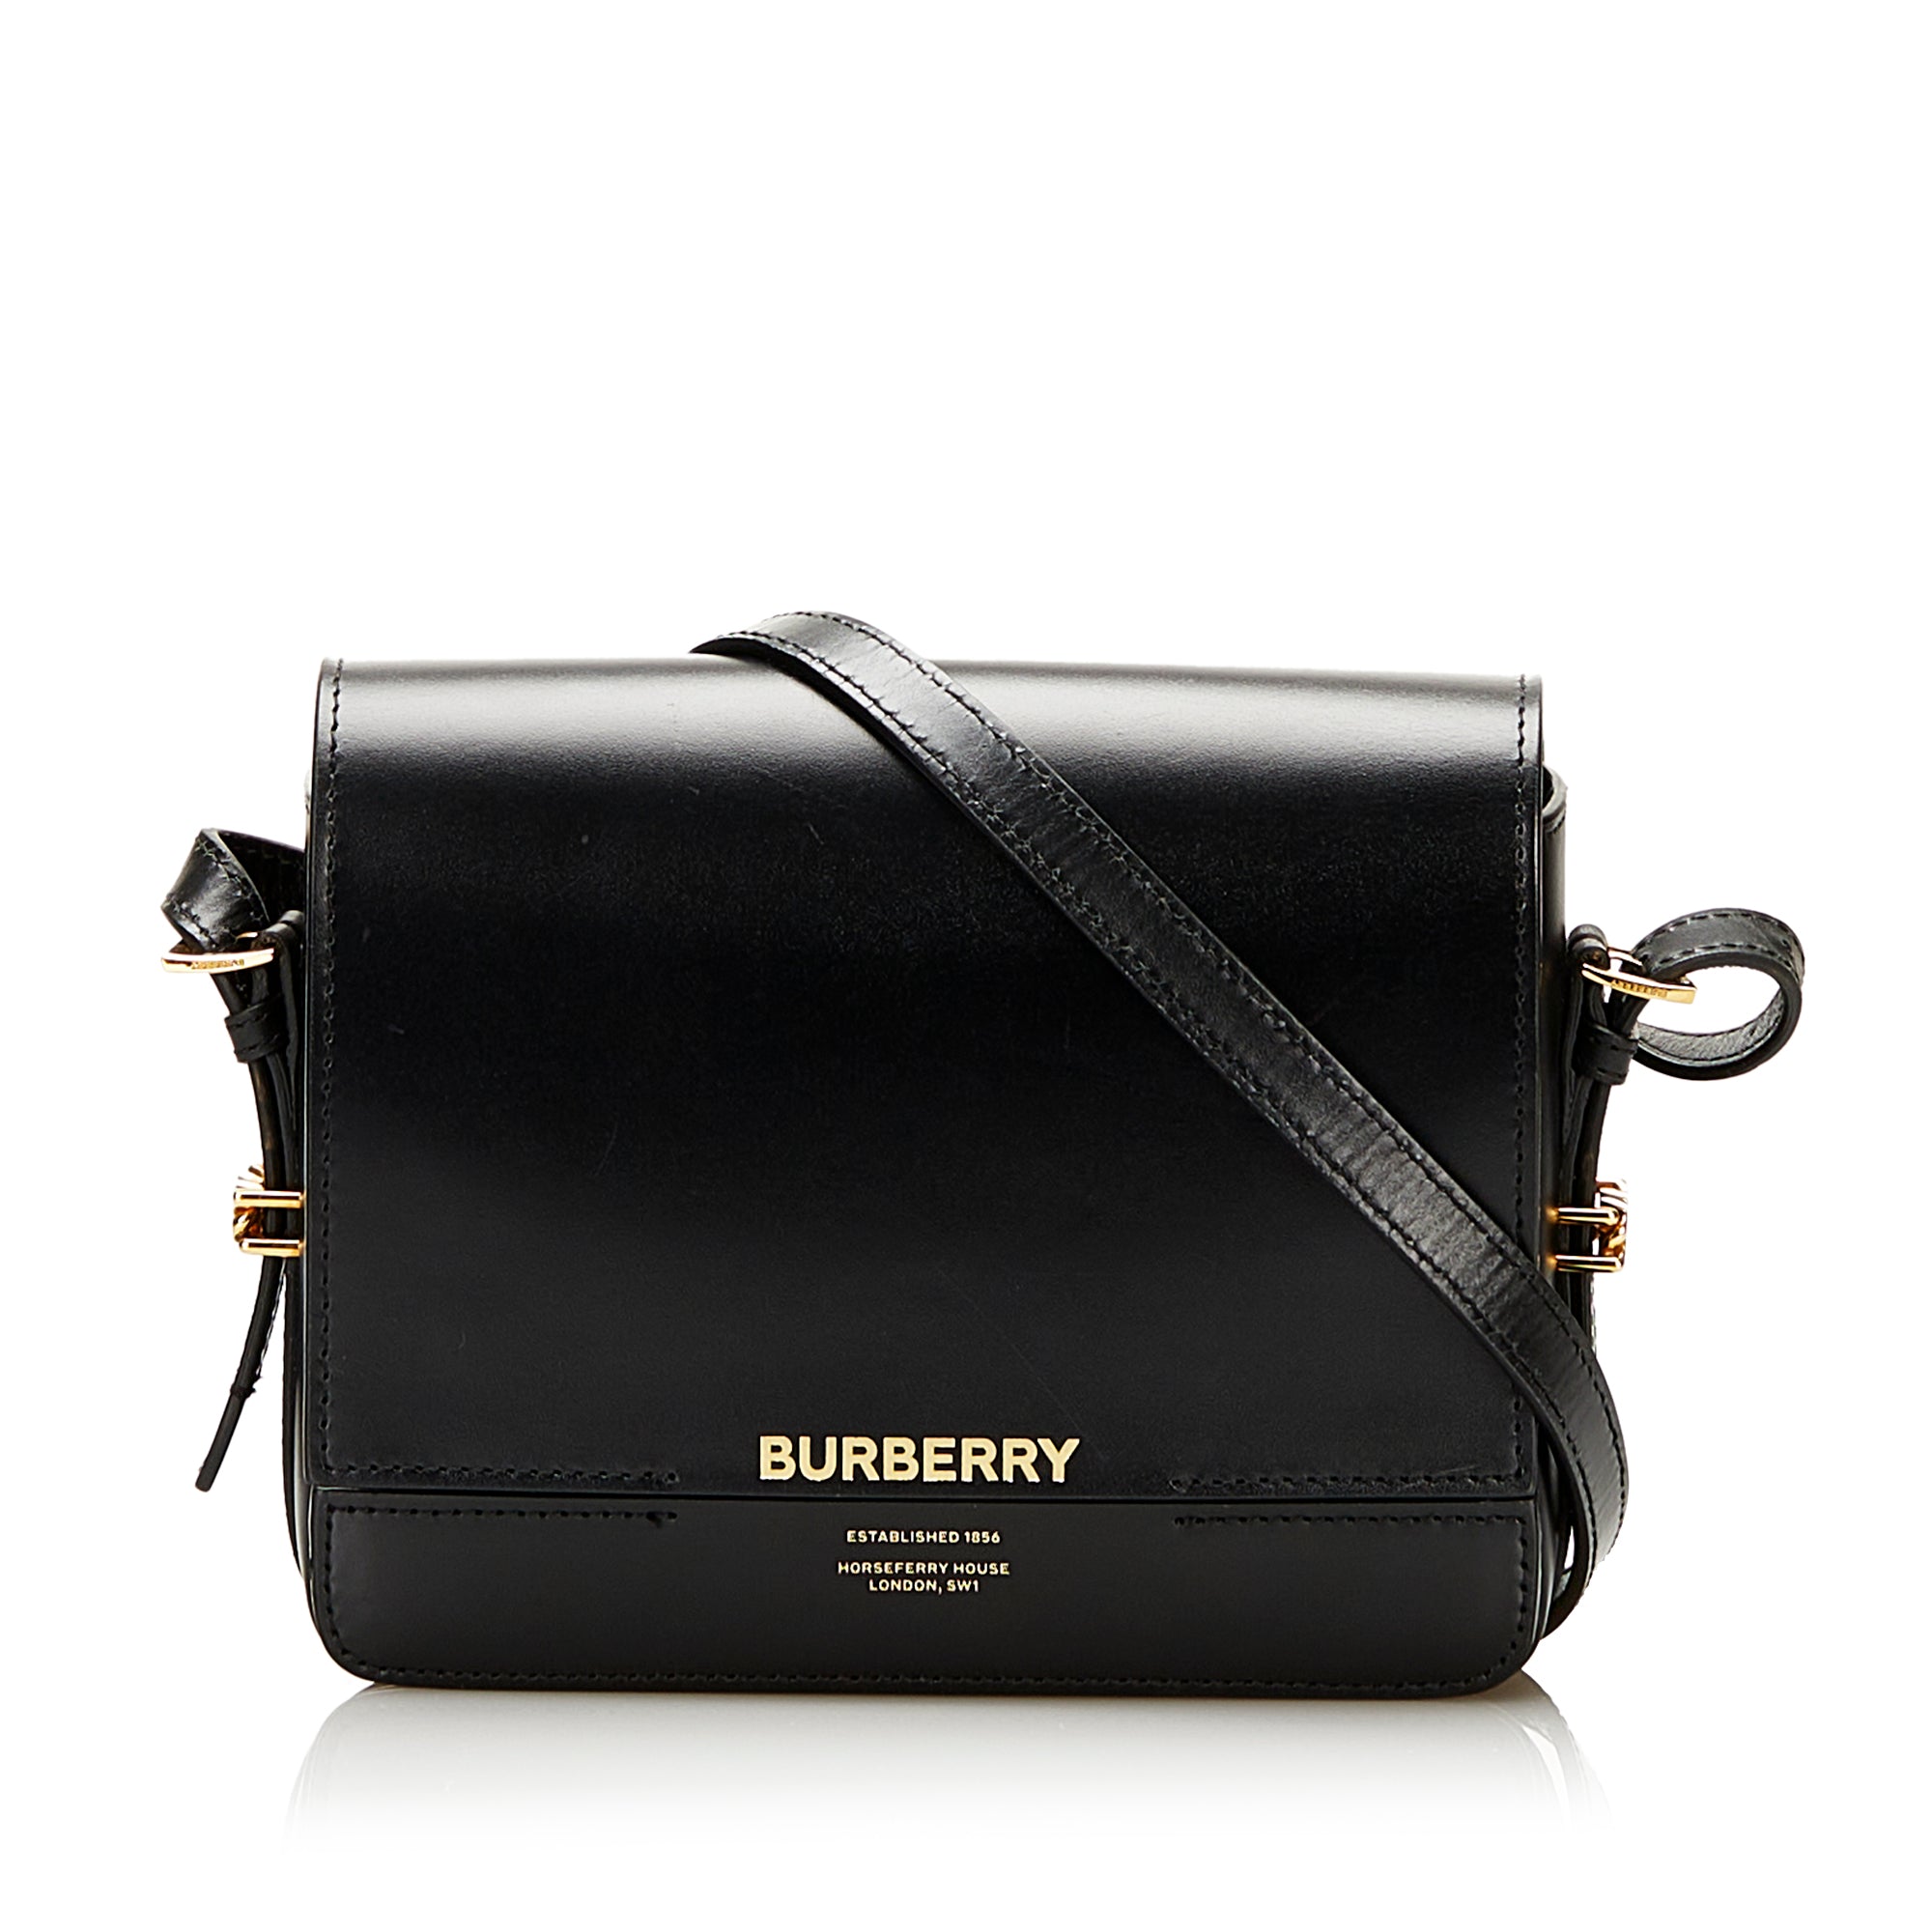 burberry brown leather bag